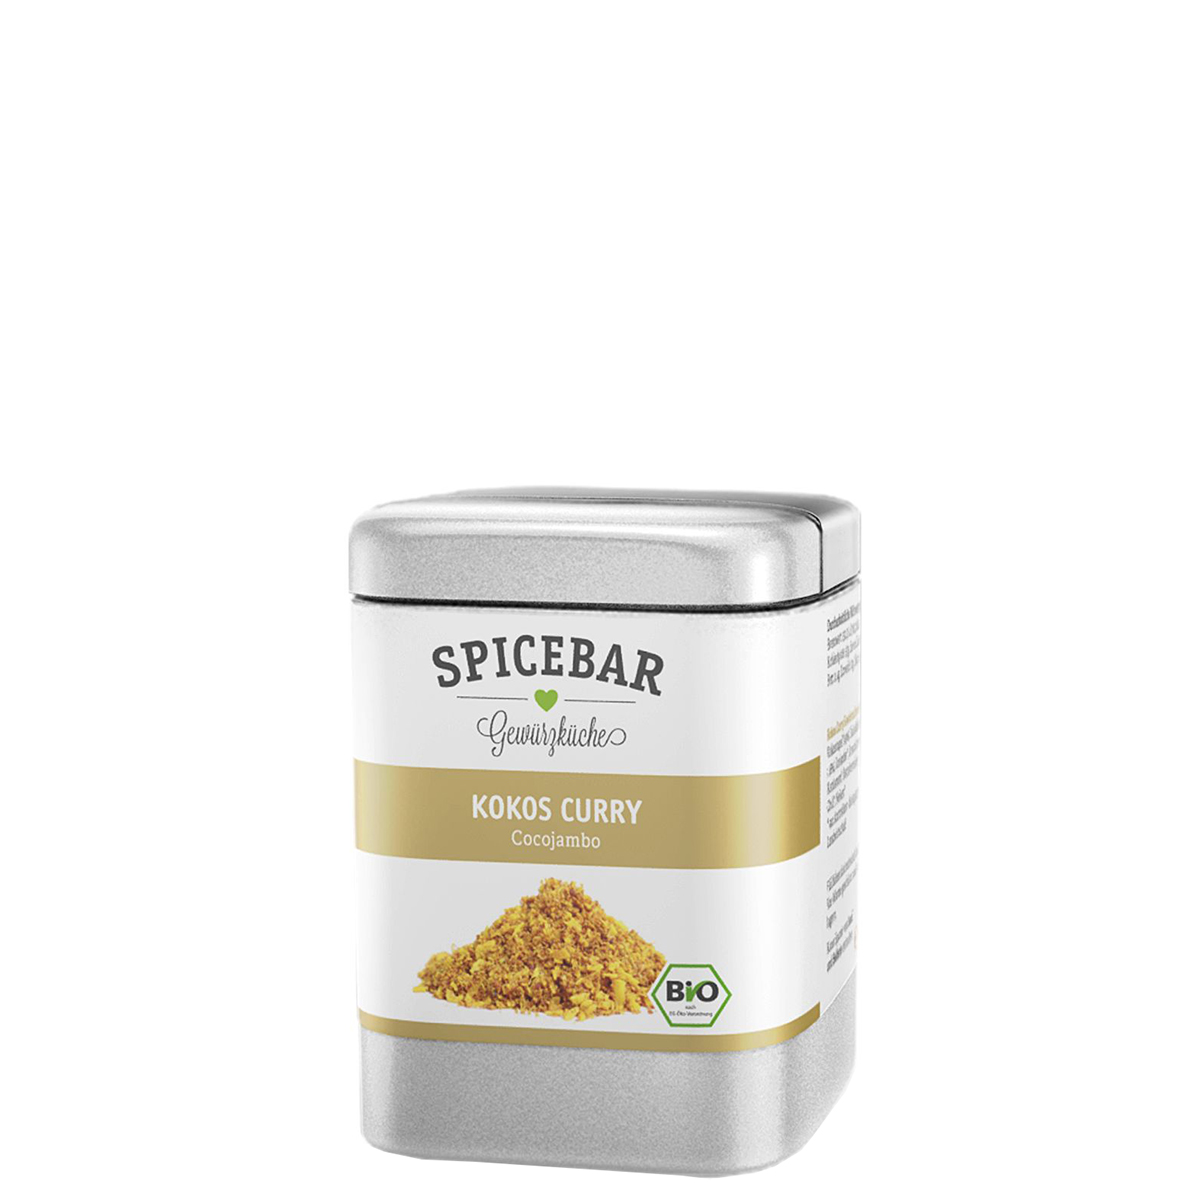 Spicebar Kokos Curry, bio Inhalt 70g